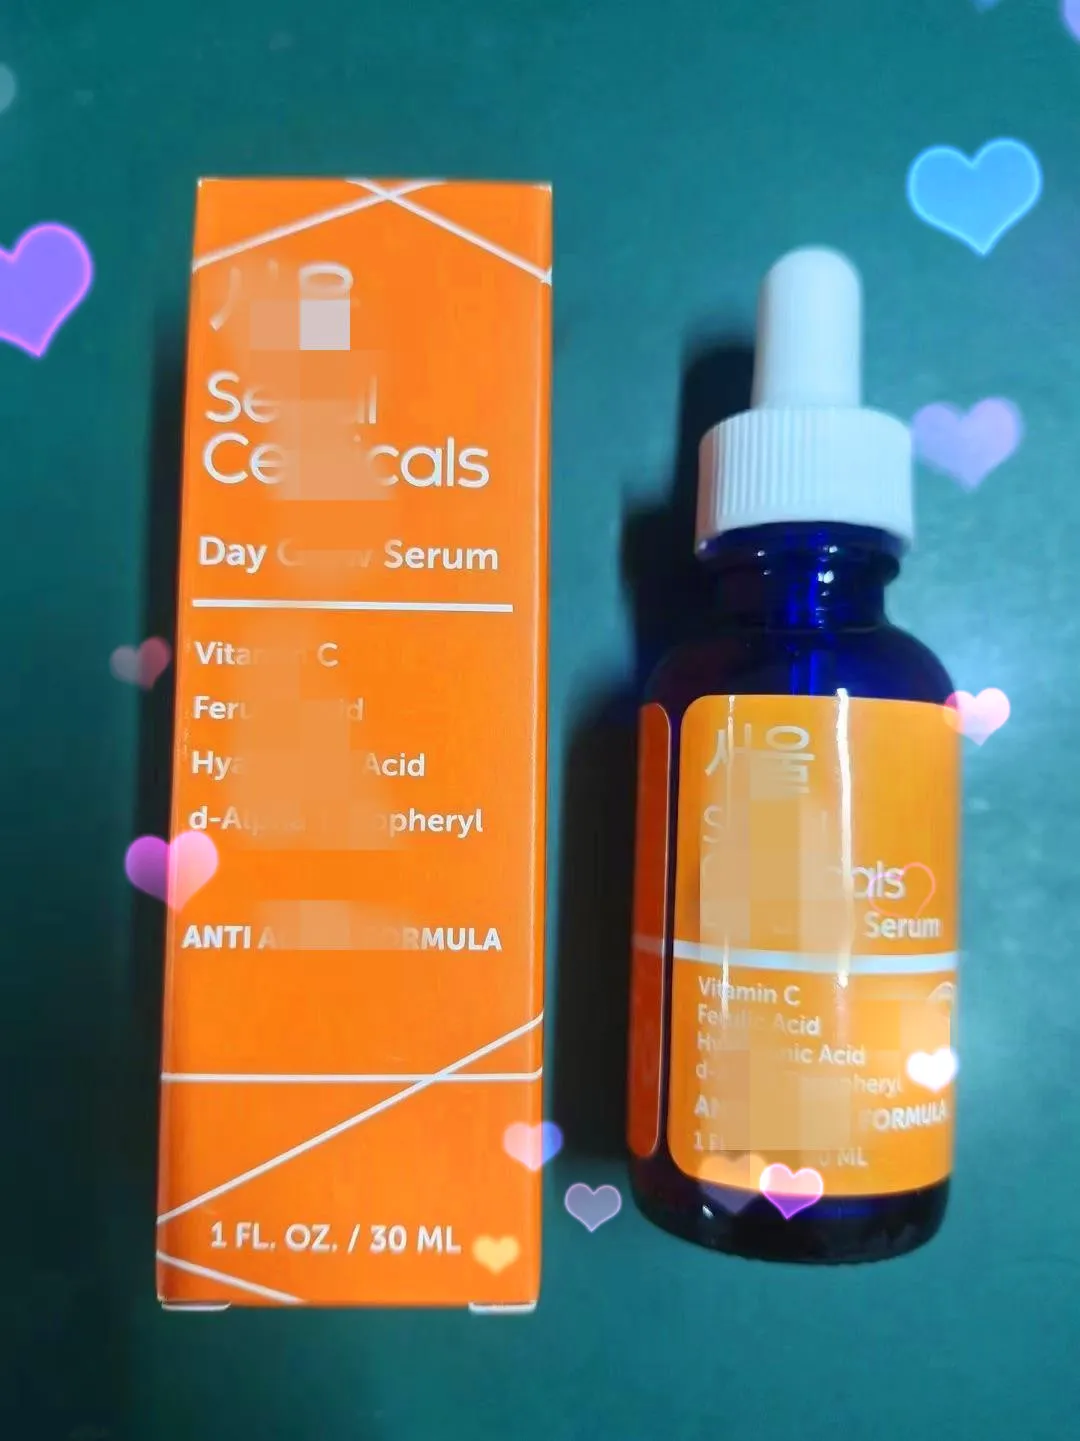 Seouls Ceuticals Se Oul Day Glow Serum 20%  1FL OZ /30 ML